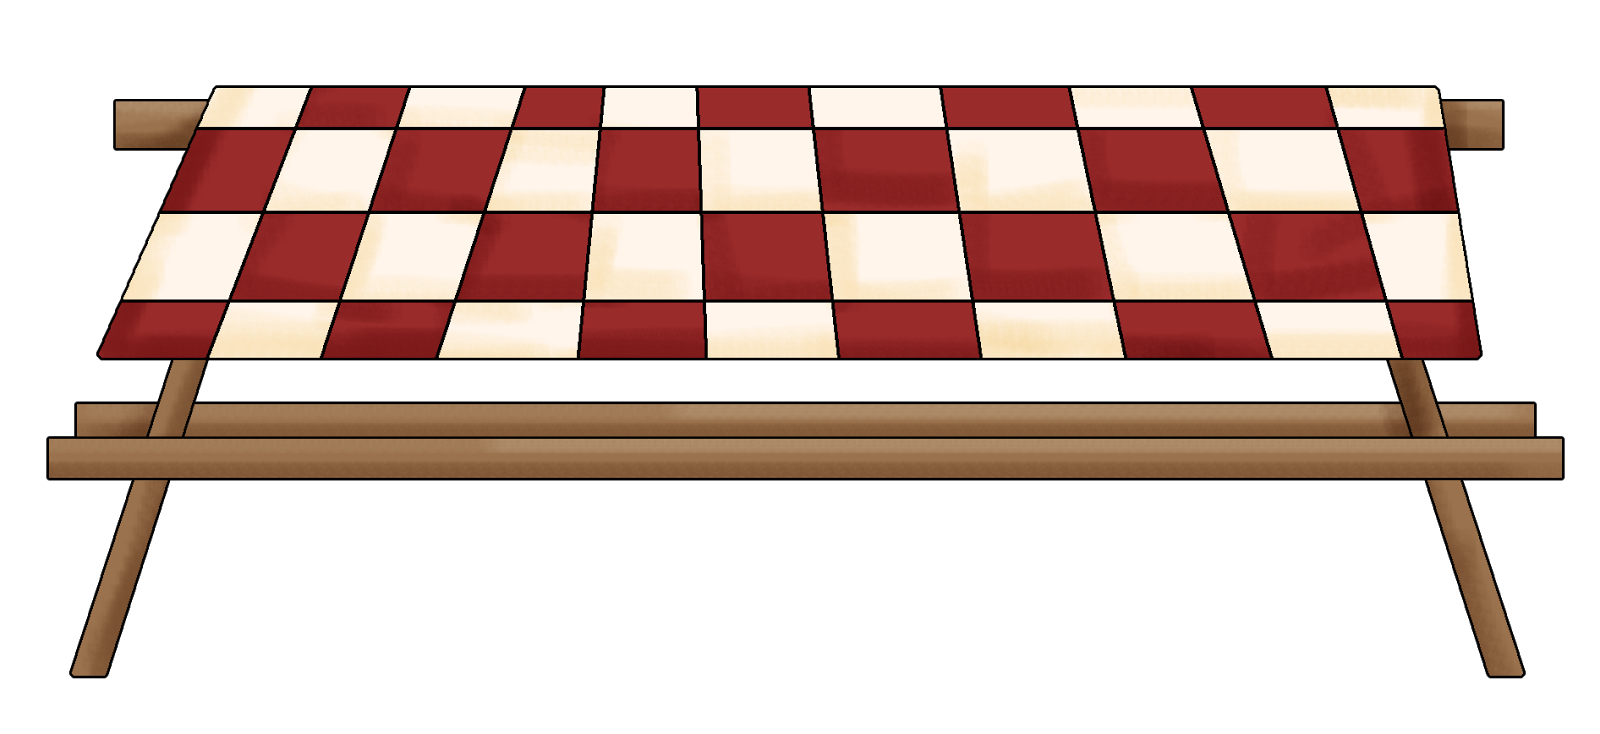 Picnic Table Clipartby ctecon